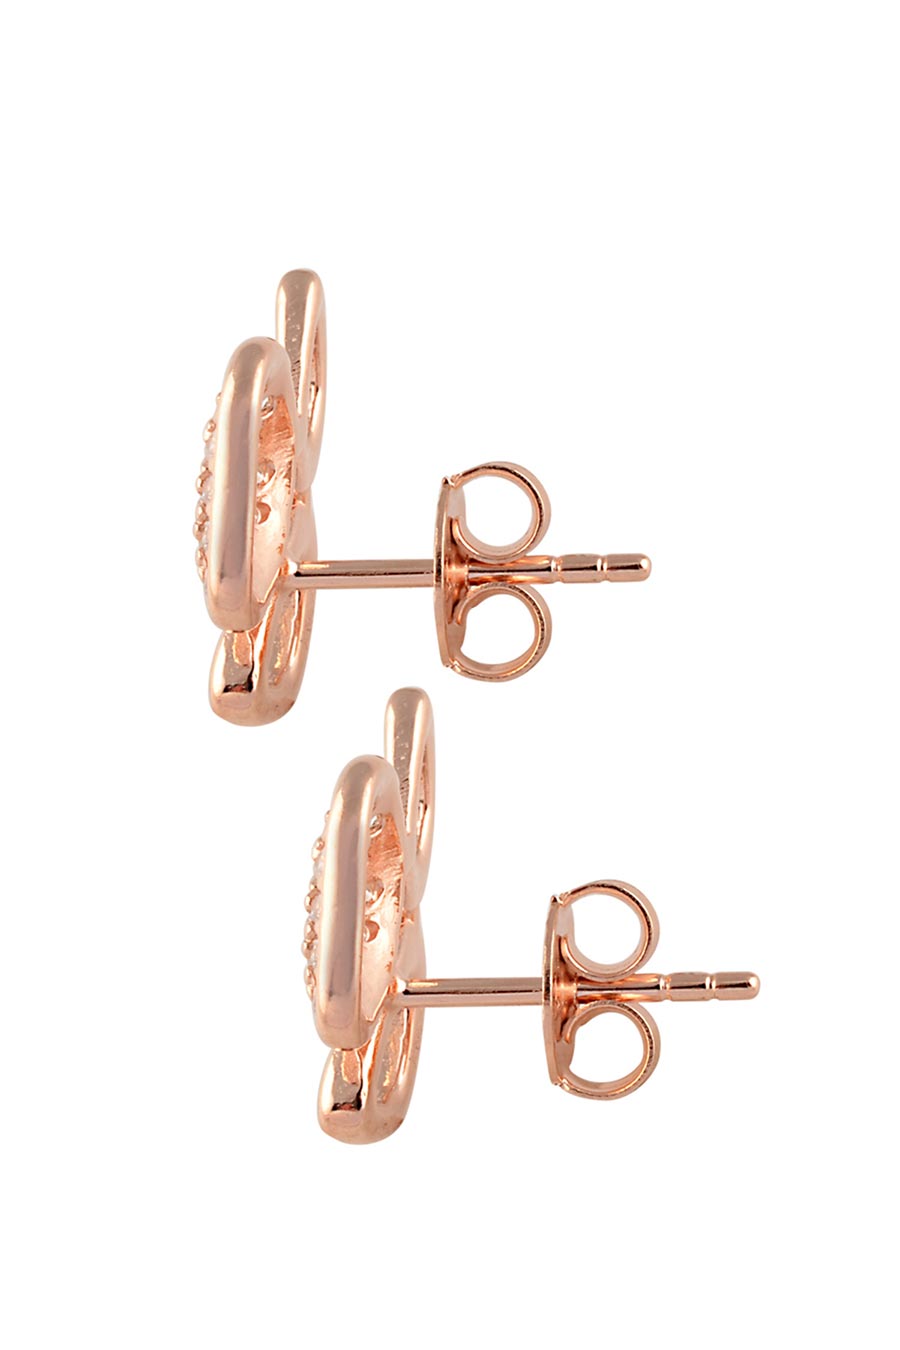 Tri Motif Rose Gold Stud Earrings